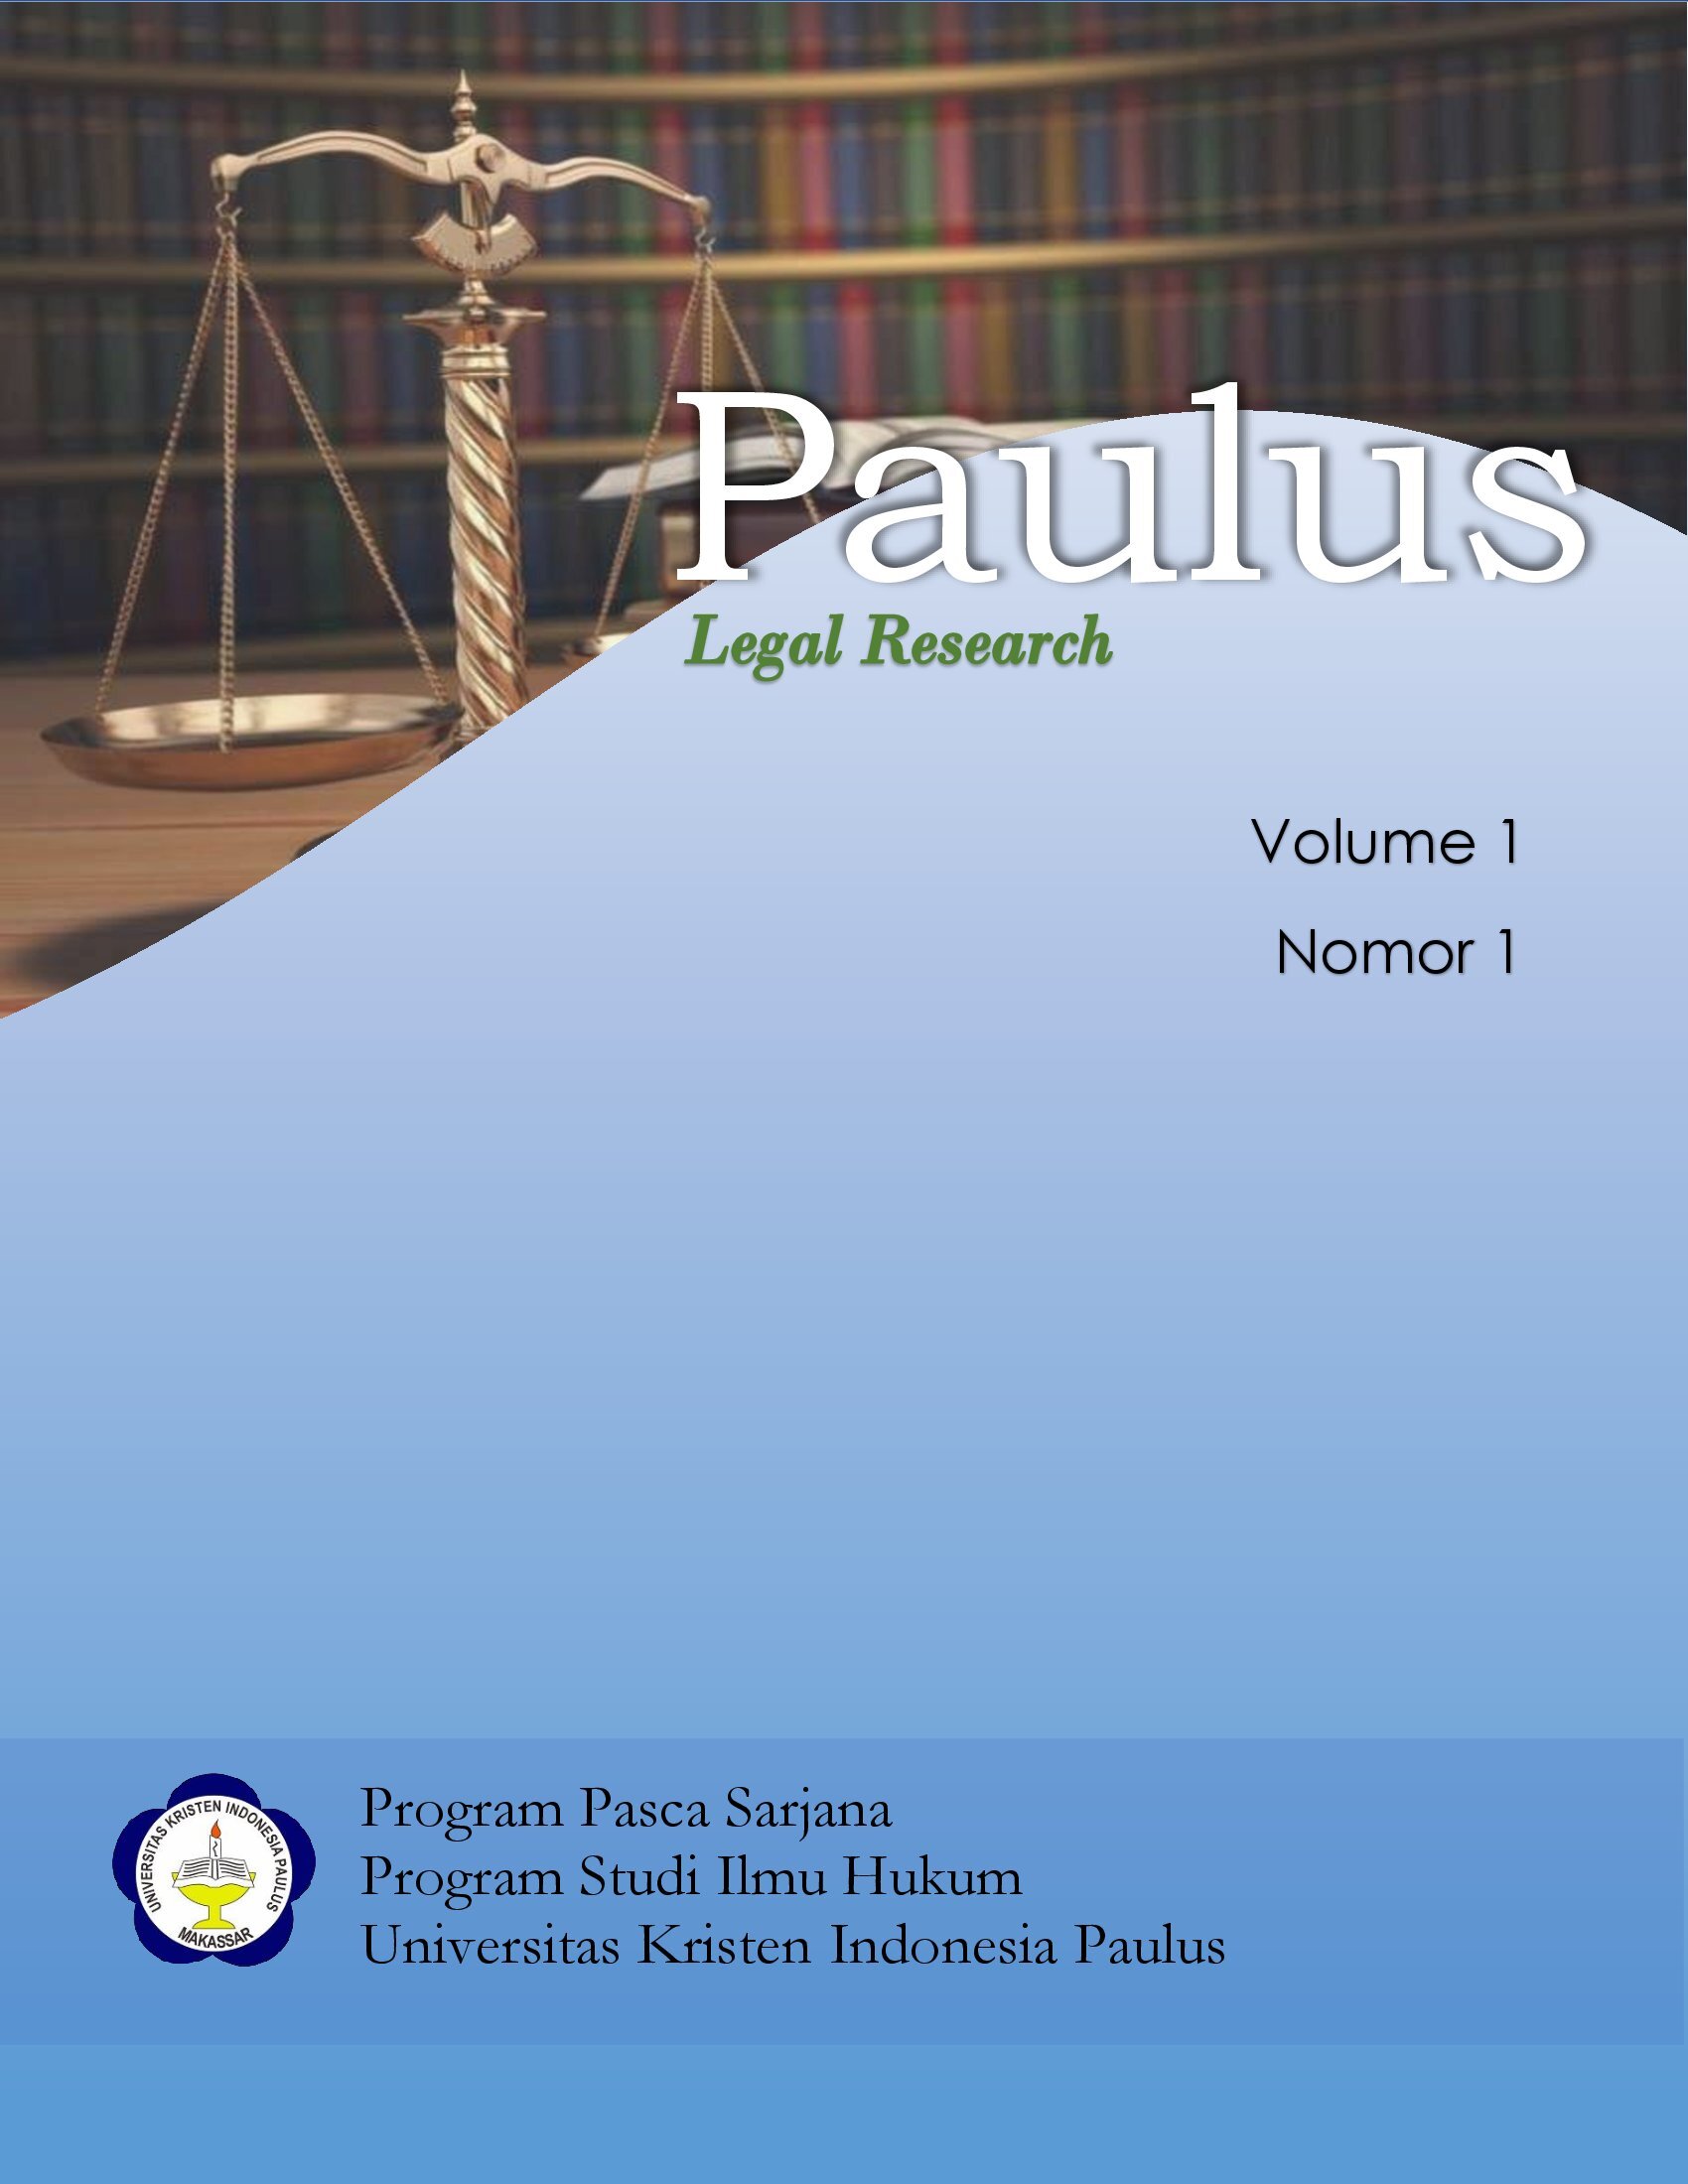 					Lihat Vol 1 No 1 (2021): Vol.1 No.1 June 2021 Paulus Legal Research
				